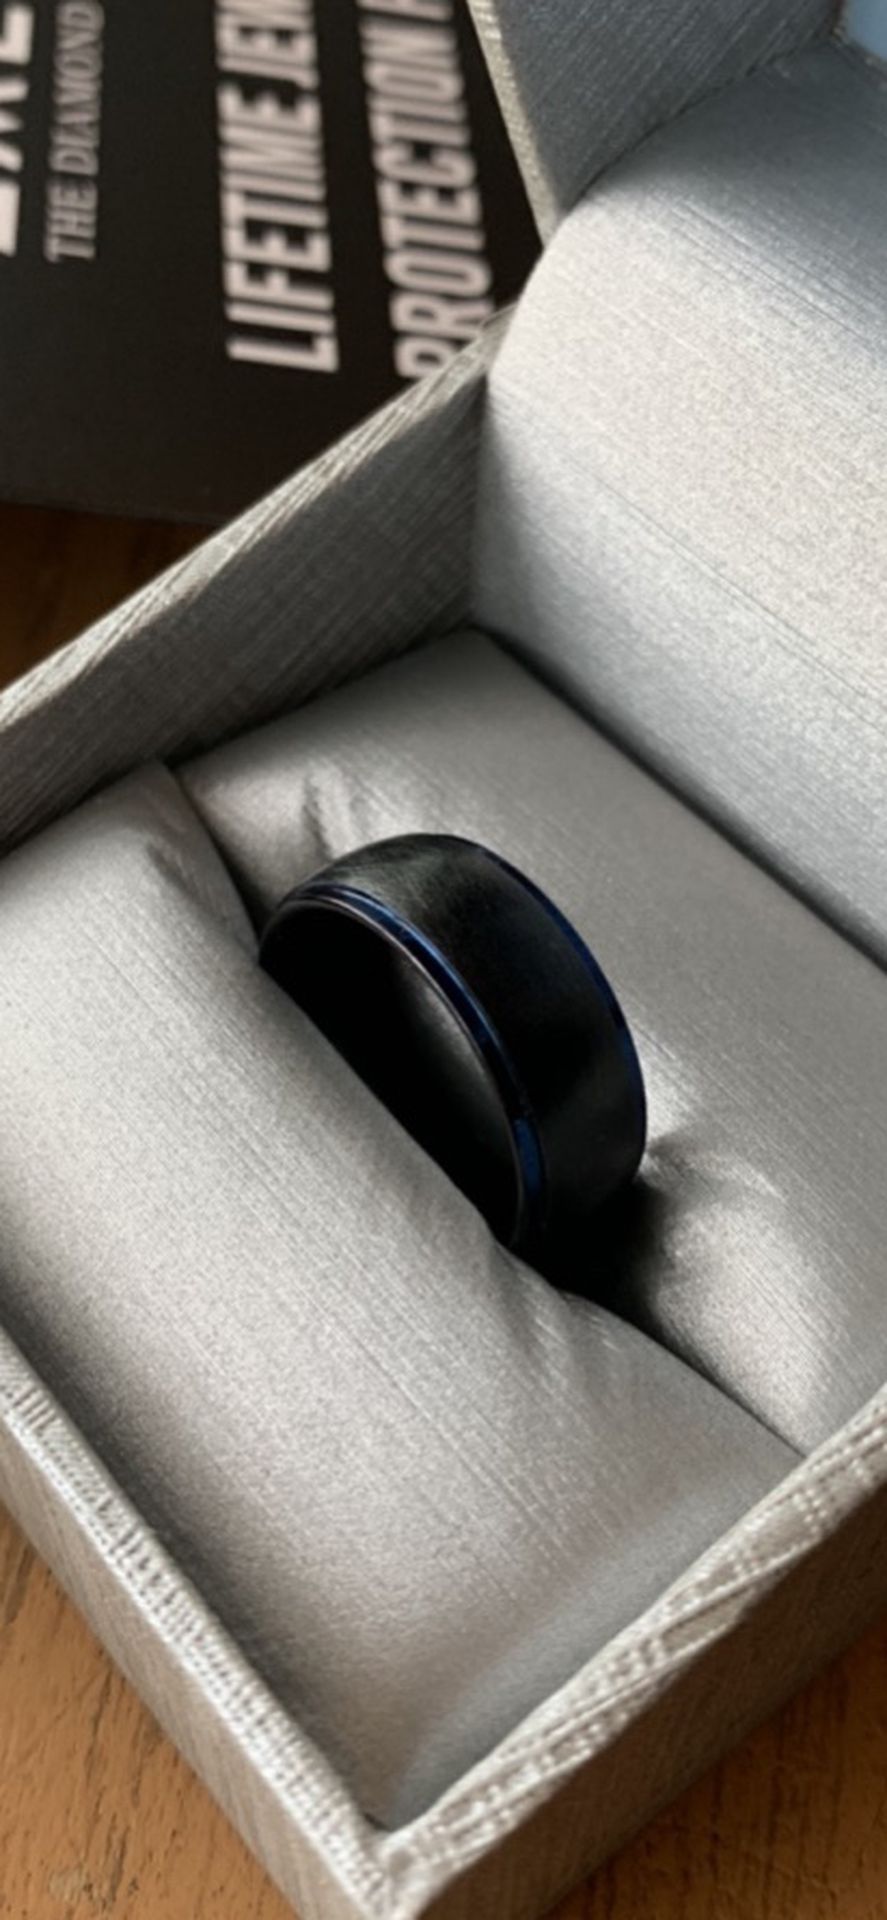 Zales Tantalum 8mm Black/Blue Mens Engagement Wedding Ring Size 8.5